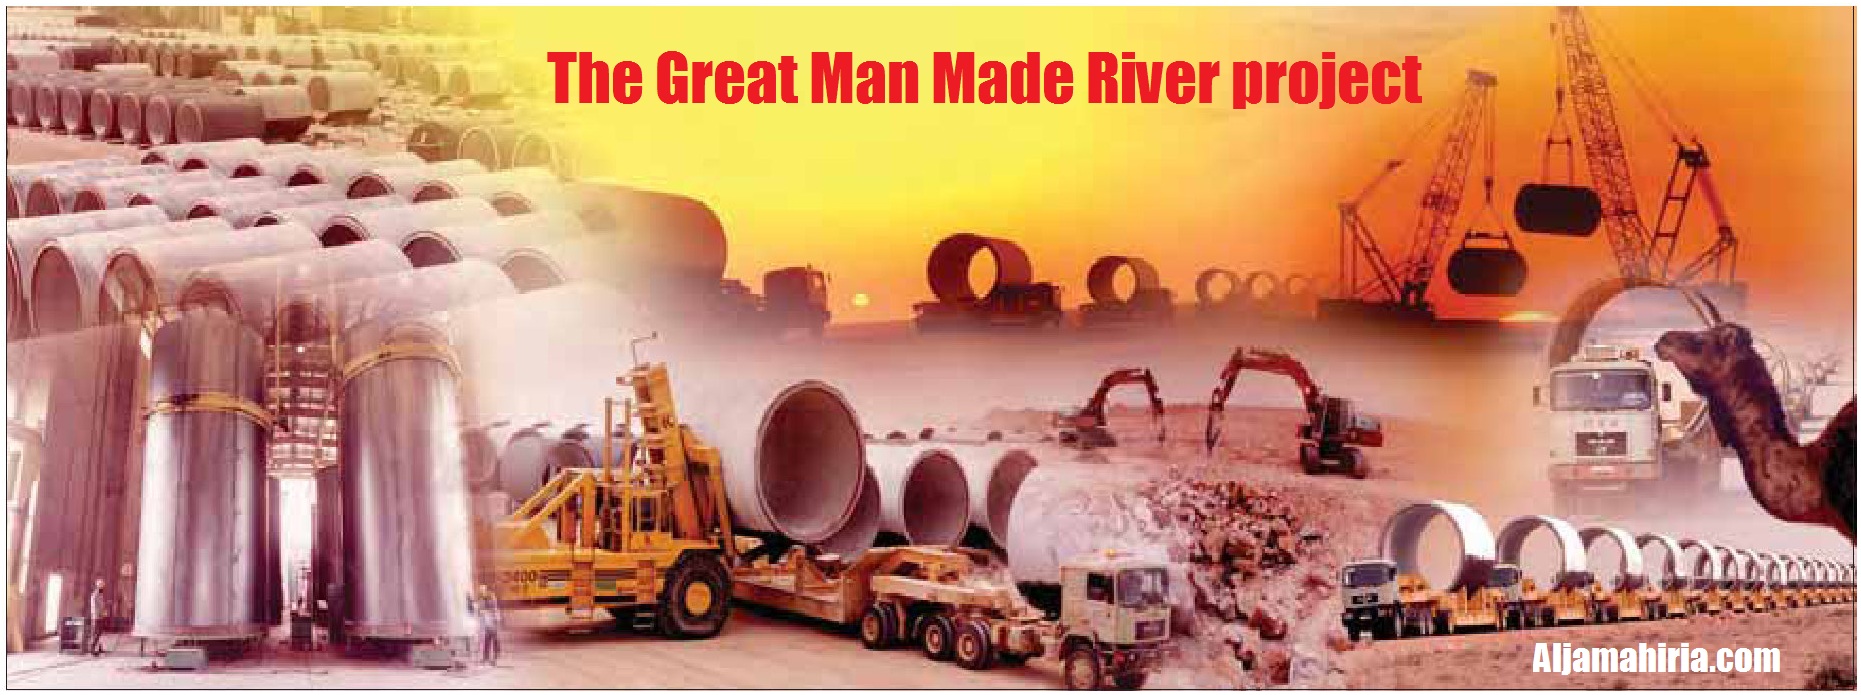 GMMR - Great Man Made River - Libya